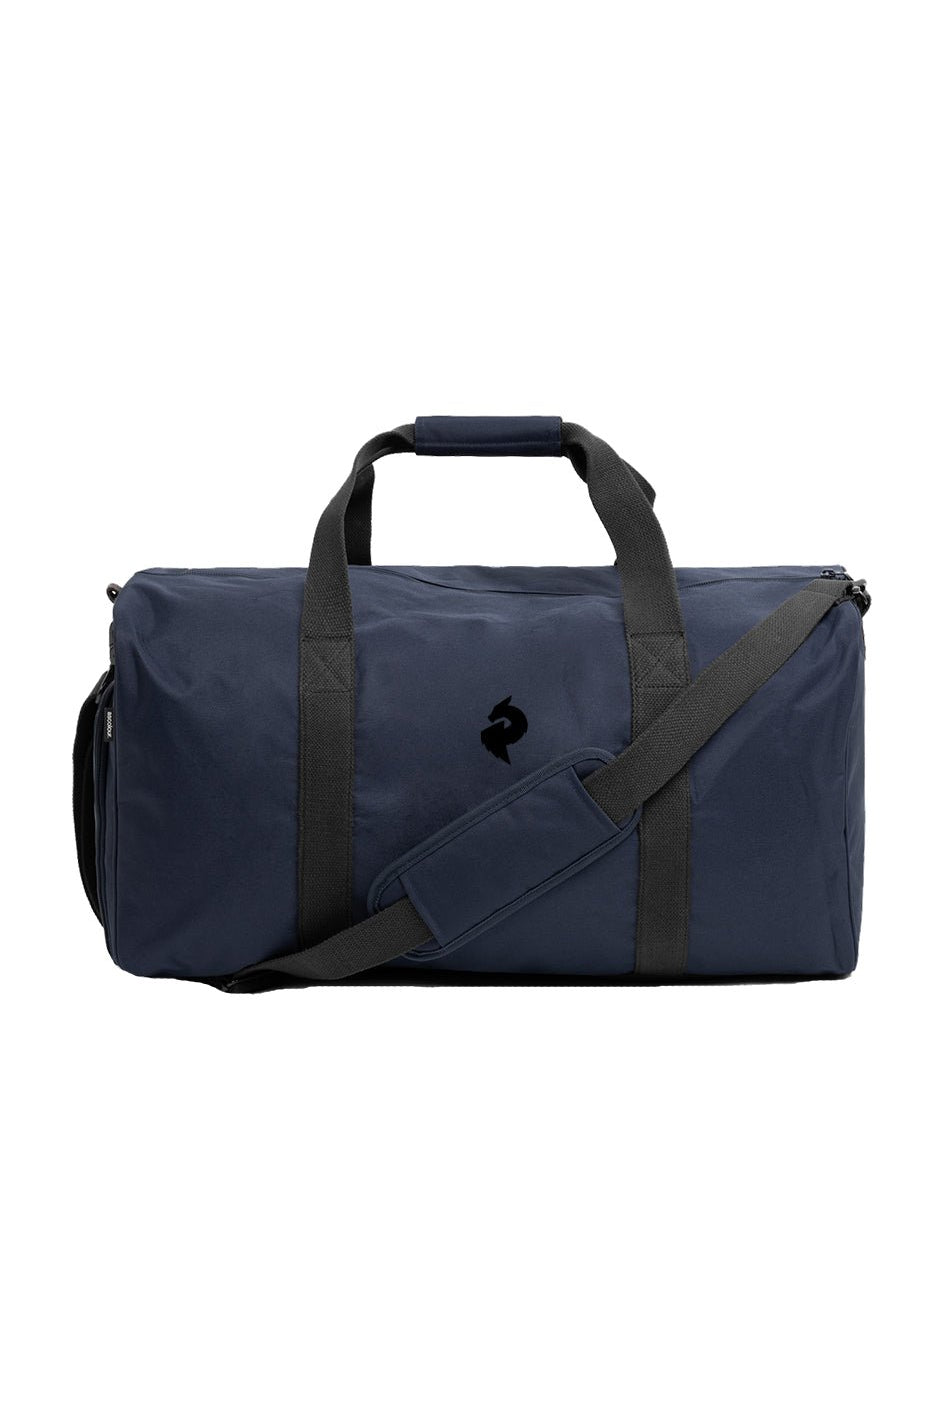 Midnight/Black Travel Bag by Dragon Foxx™ - Travel Bags - Apliiq - Midnight/Black Travel Bag by Dragon Foxx™ - APQ-4570910S34A1 - One Size - MIDNIGHT/BLACK - 11” x 11” x 22-3/4” Travel Bag - Accessories - Bags